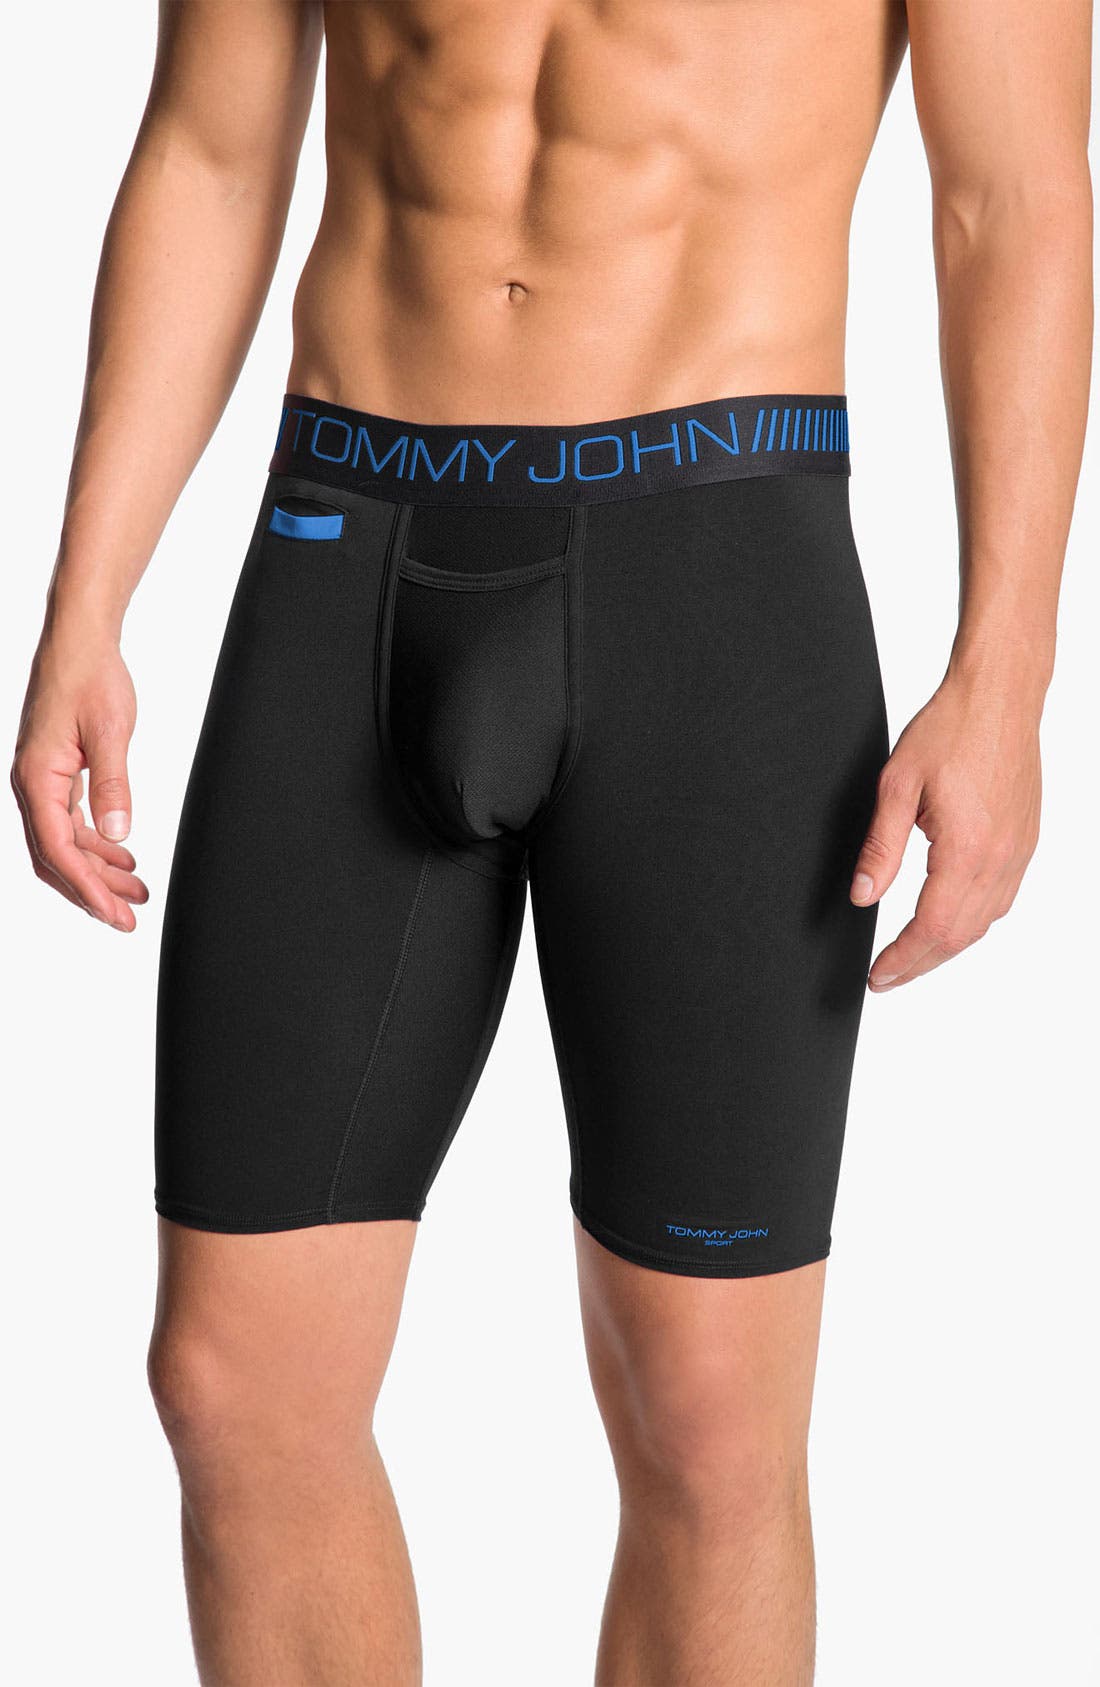 tommy john underwear customer service